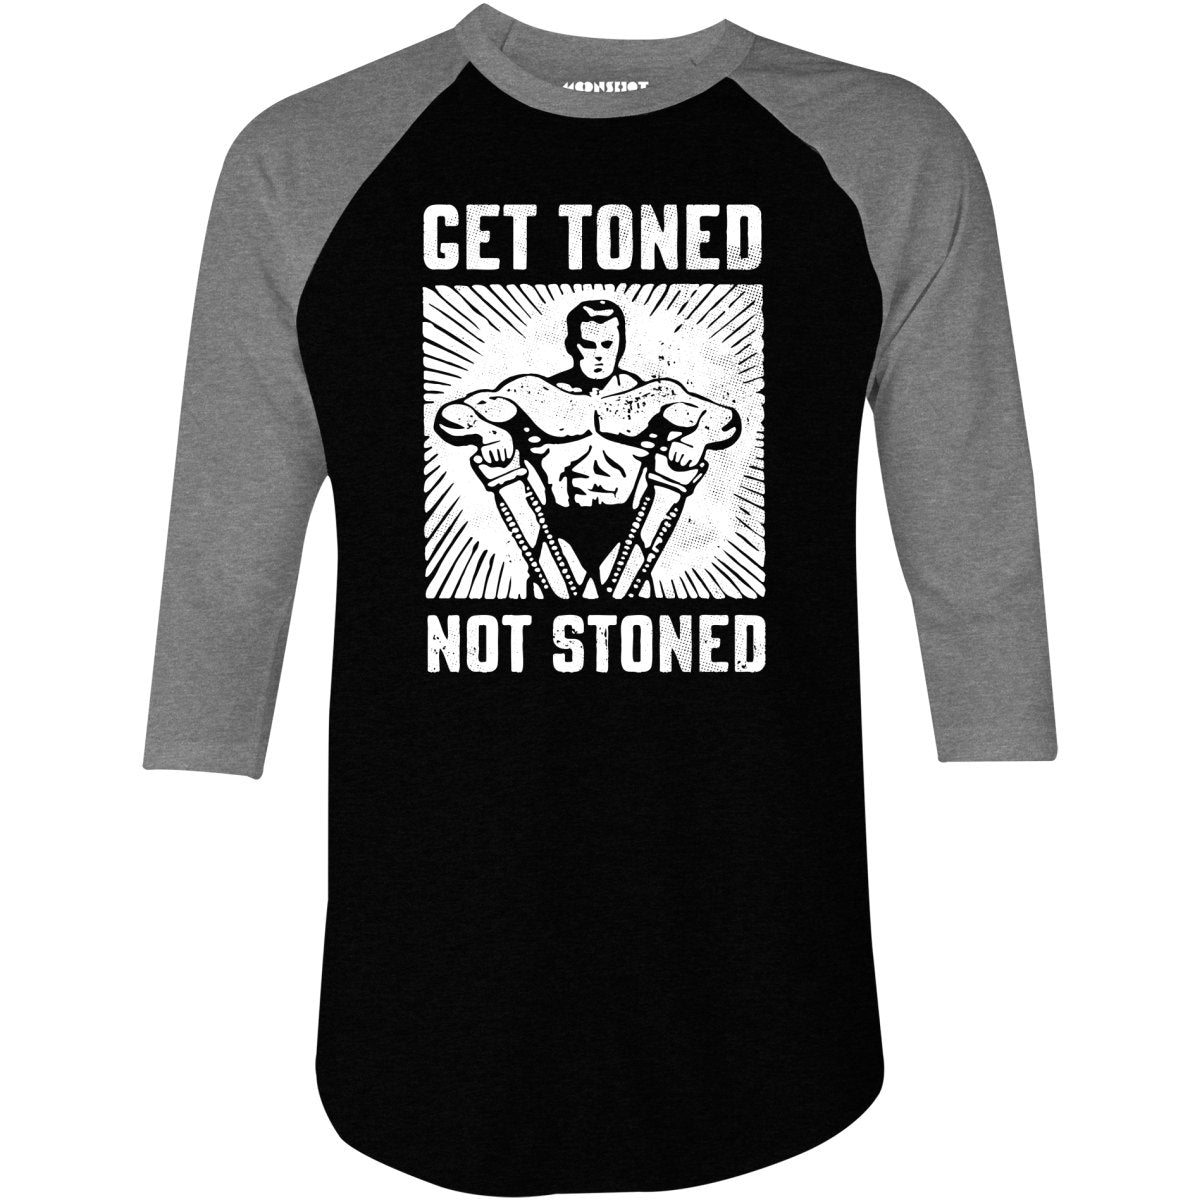 Get Toned Not Stoned - 3/4 Sleeve Raglan T-Shirt